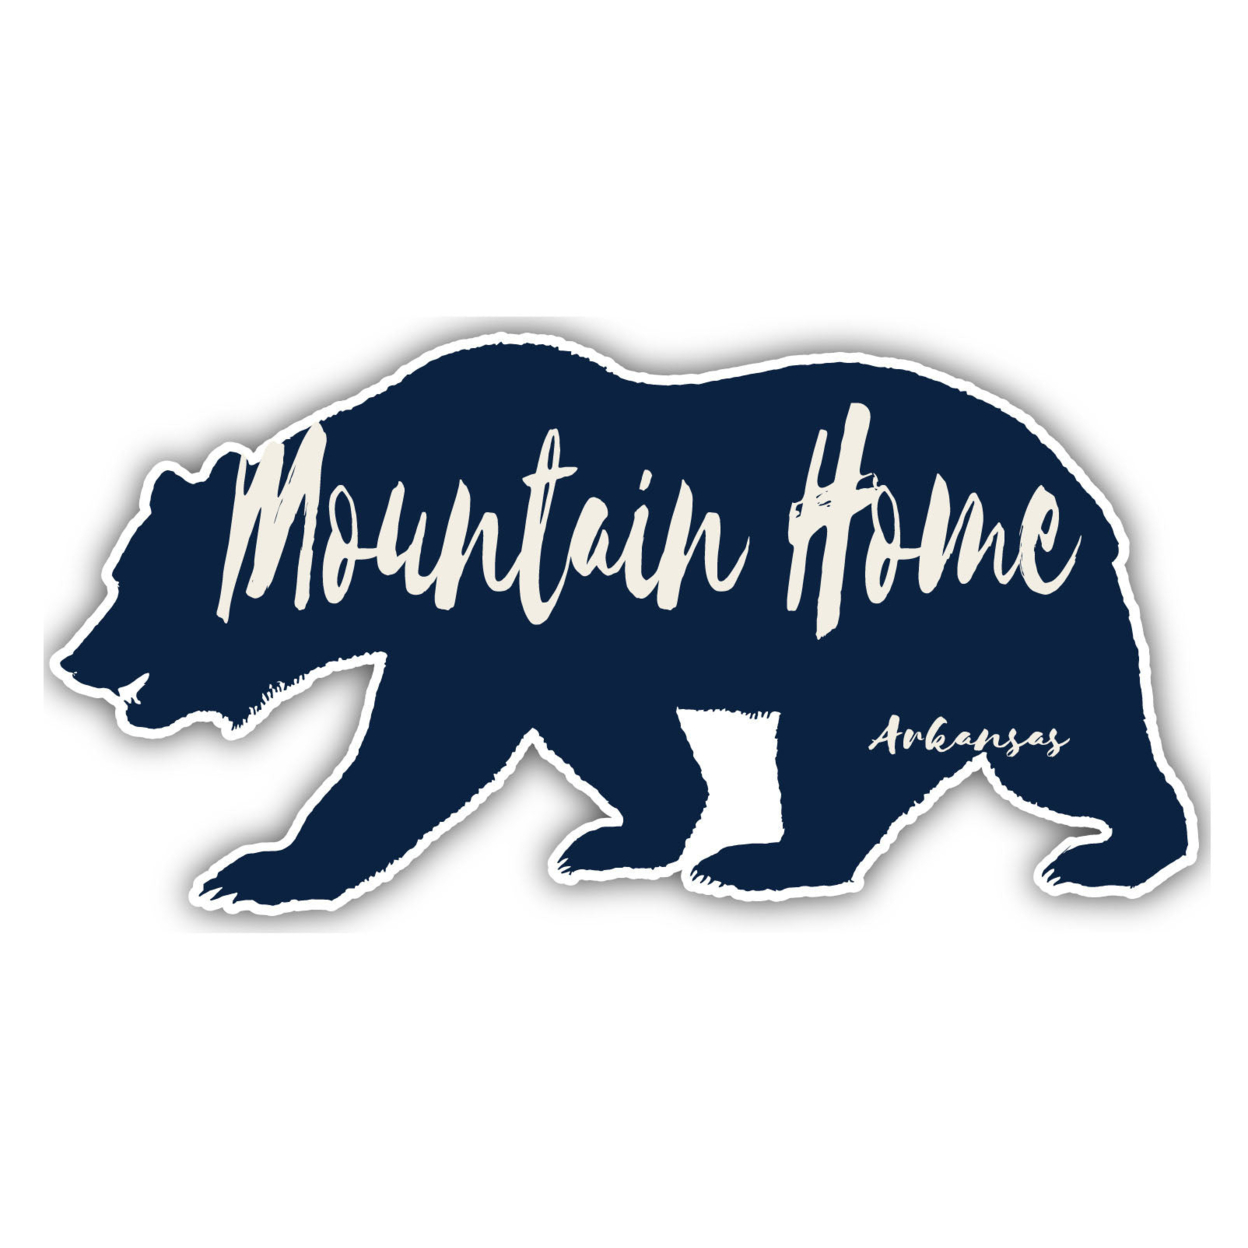 Mountain Home Arkansas Souvenir Decorative Stickers (Choose Theme And Size) - Single Unit, 4-Inch, Bear